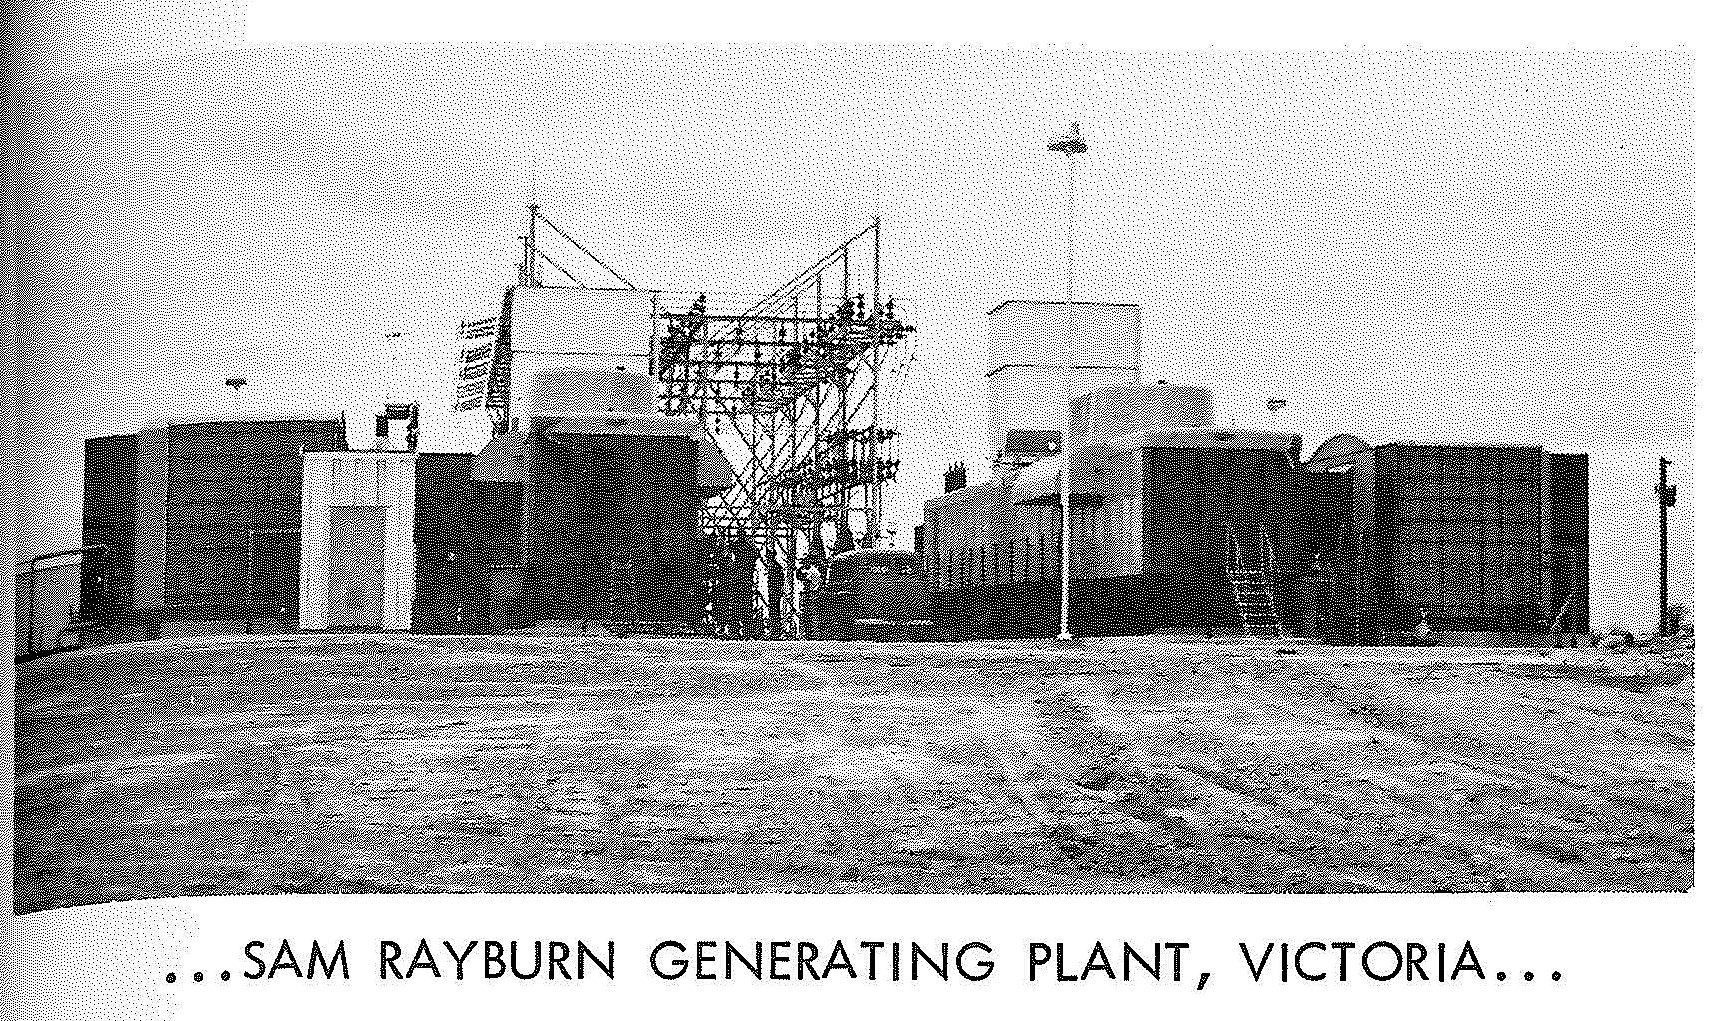 Sam Rayburn Power Plant Victoria 1964